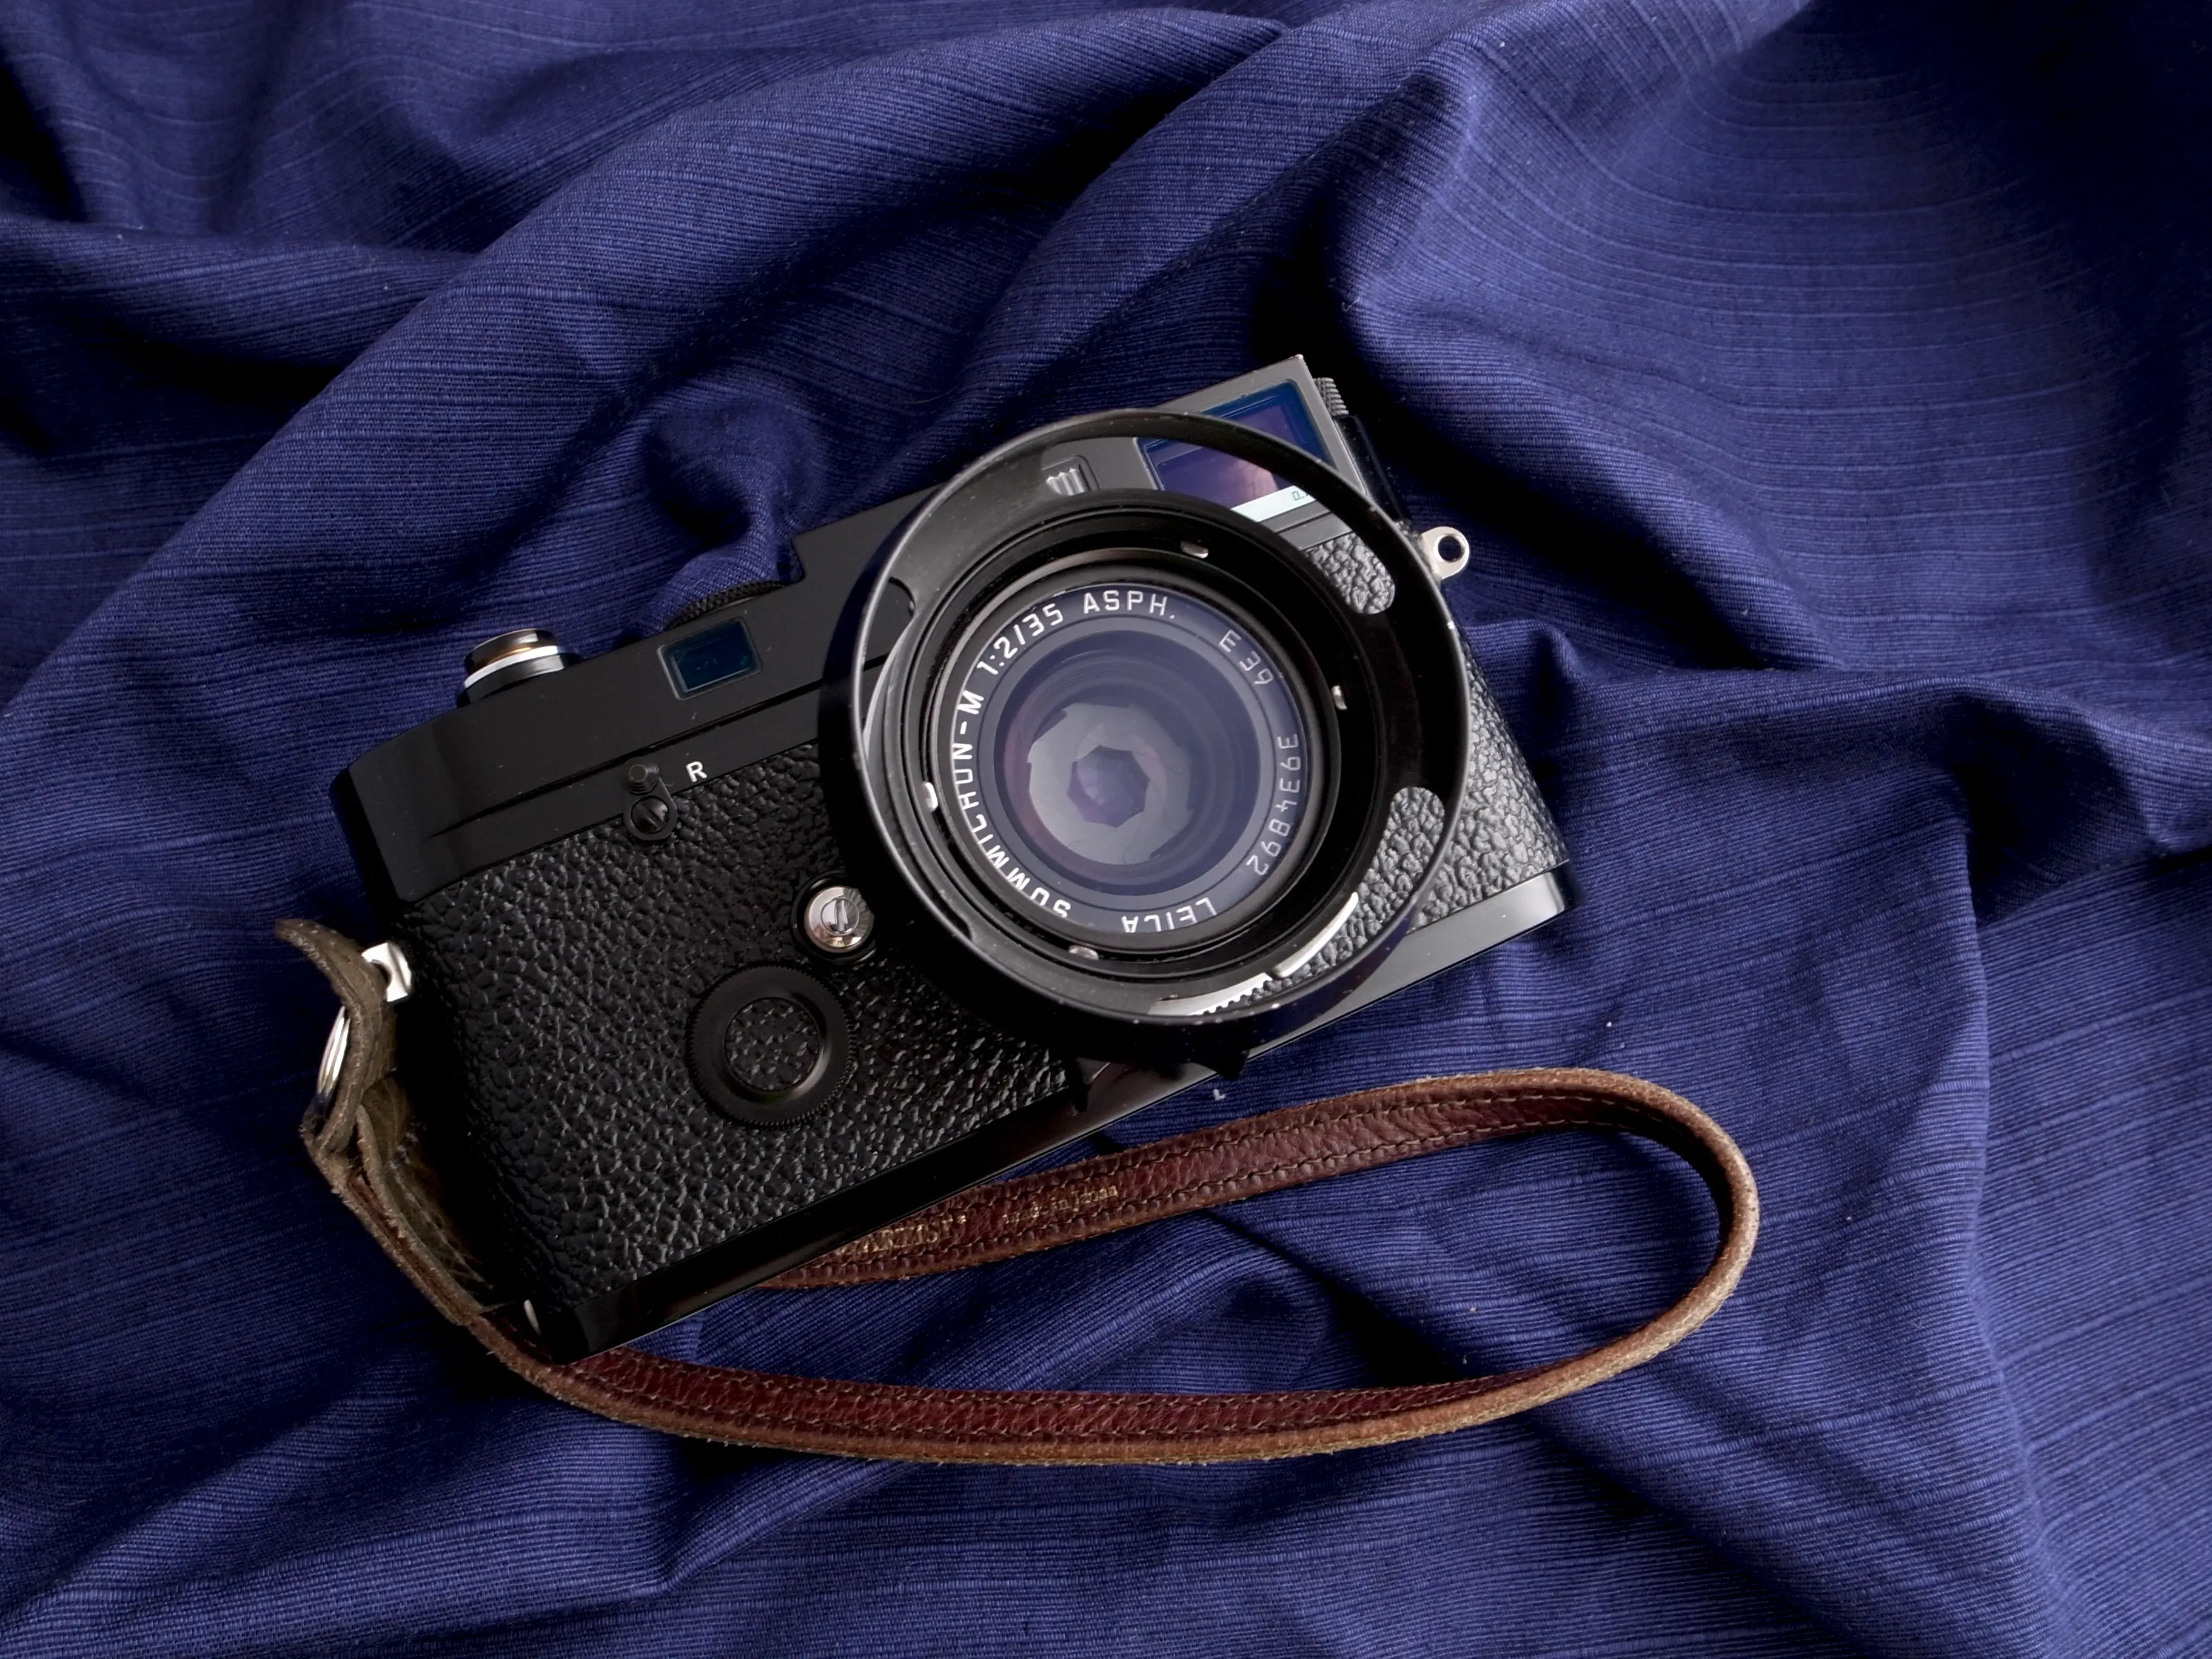 The Leica MP-6